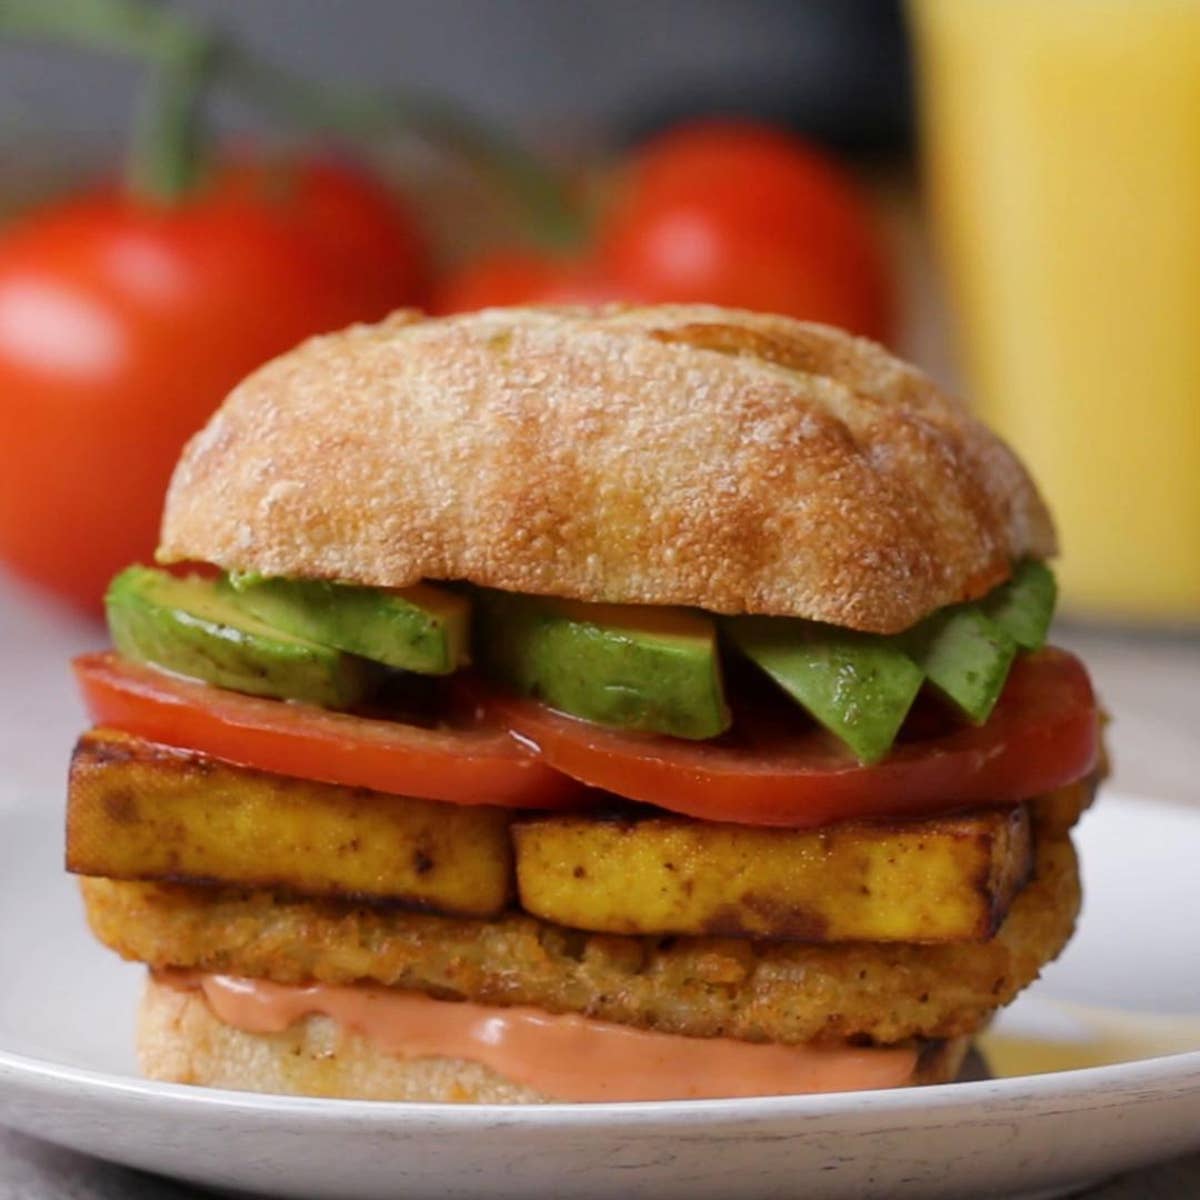 Tofu “Egg” Breakfast Sandwich